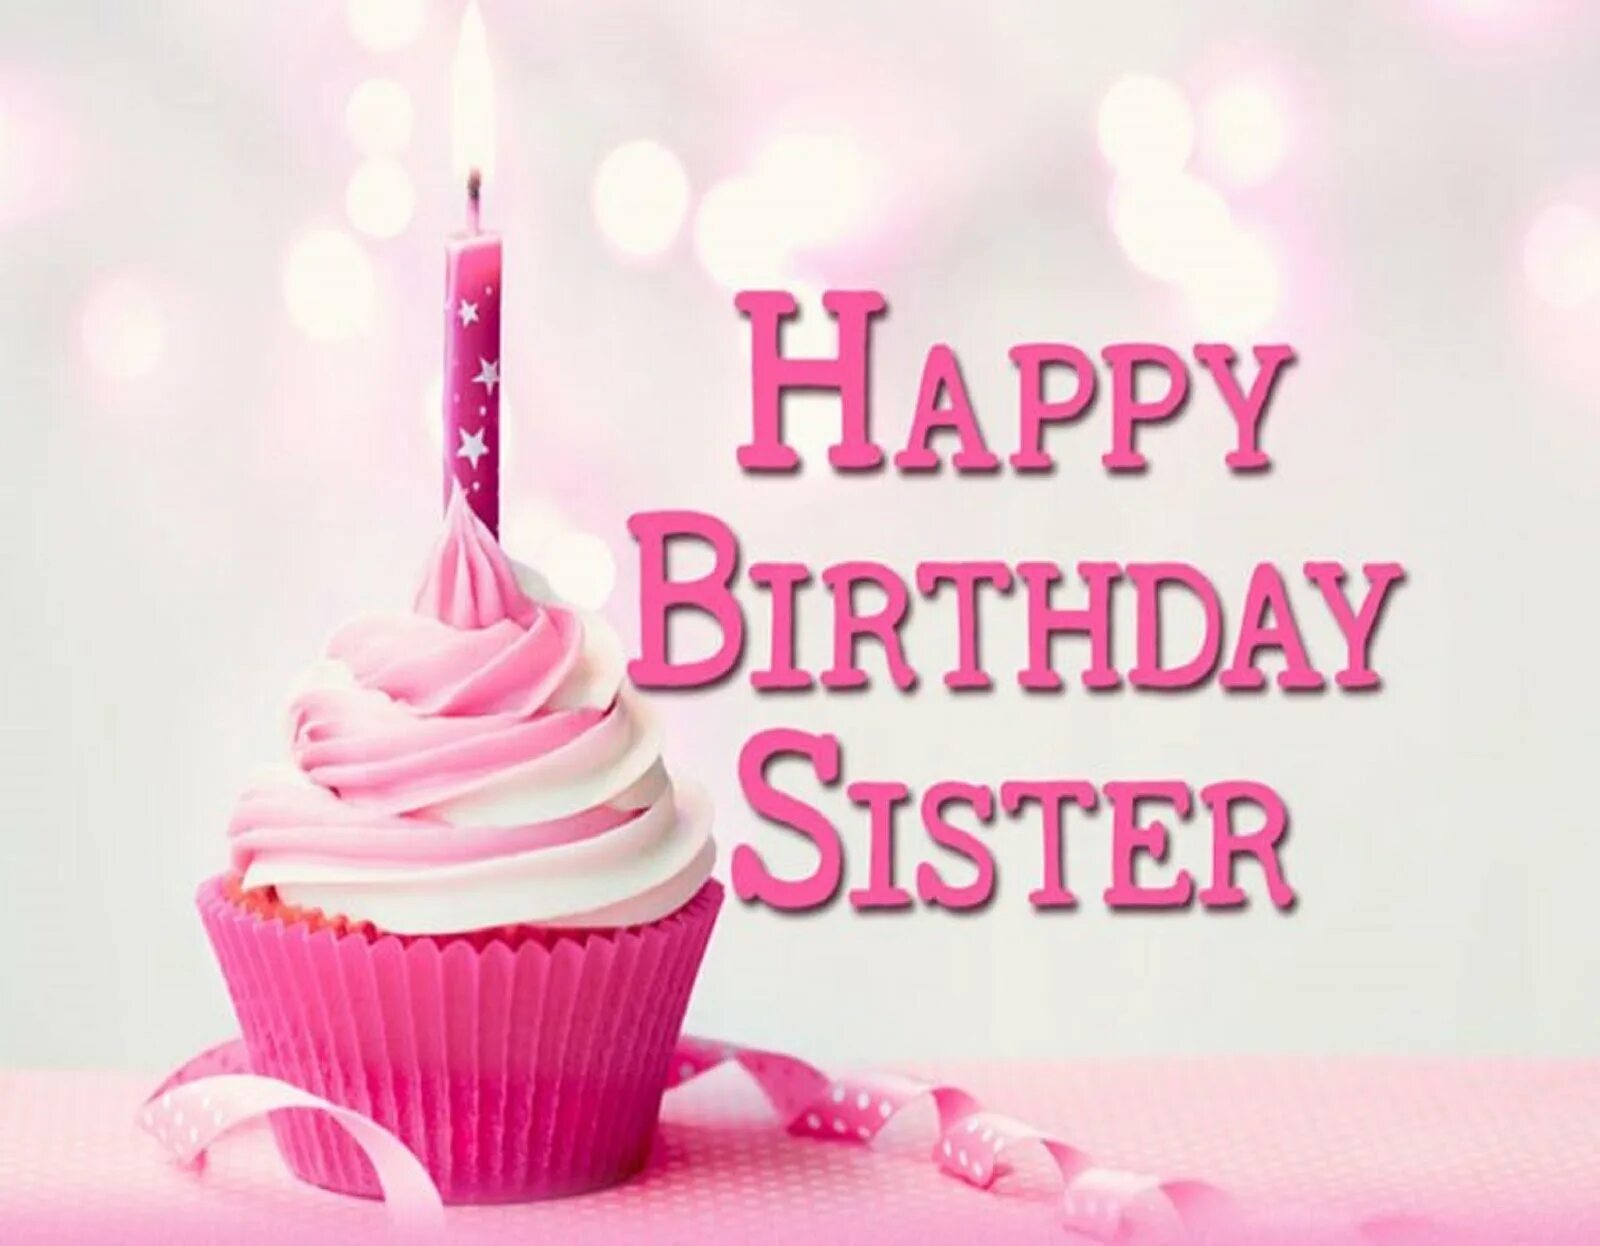 Sister s birthday. Happy Birthday sister. Happy Birthday сестренка. Happy Birthday for sister. С днём рождения систер картинки.